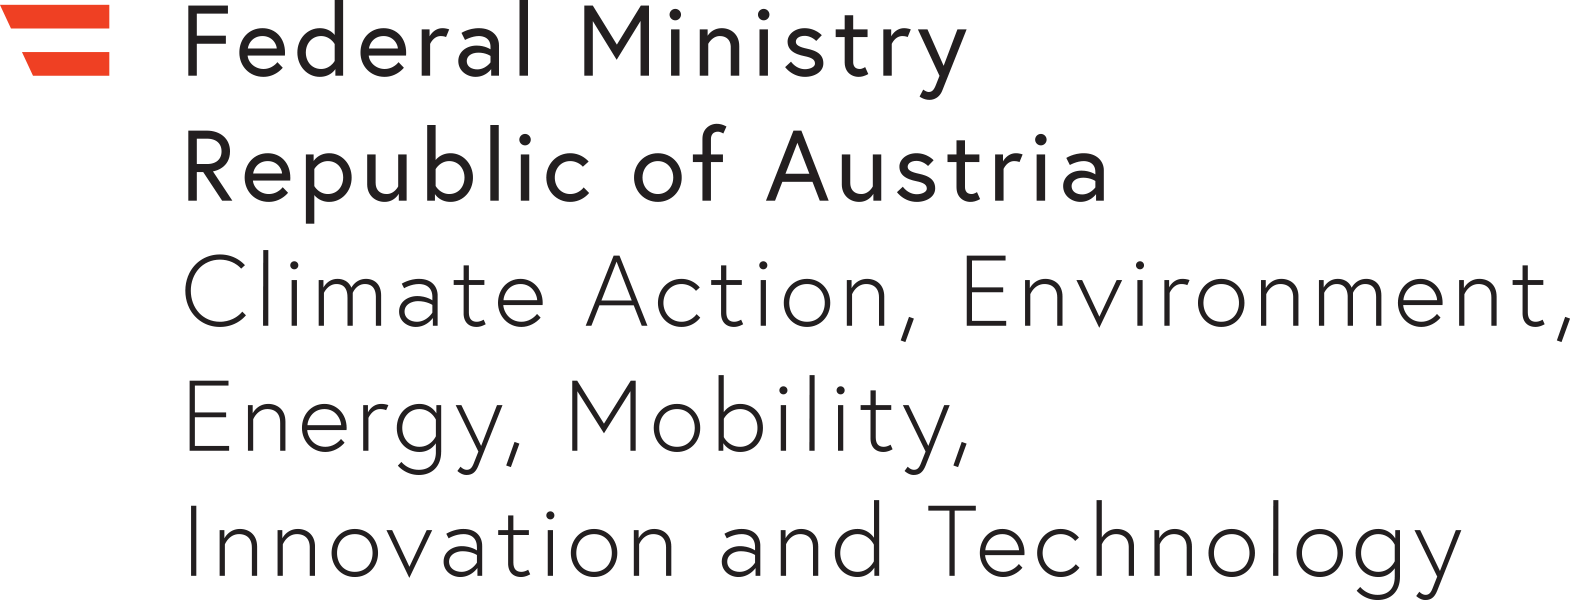 Federal Ministry Republic of Austria